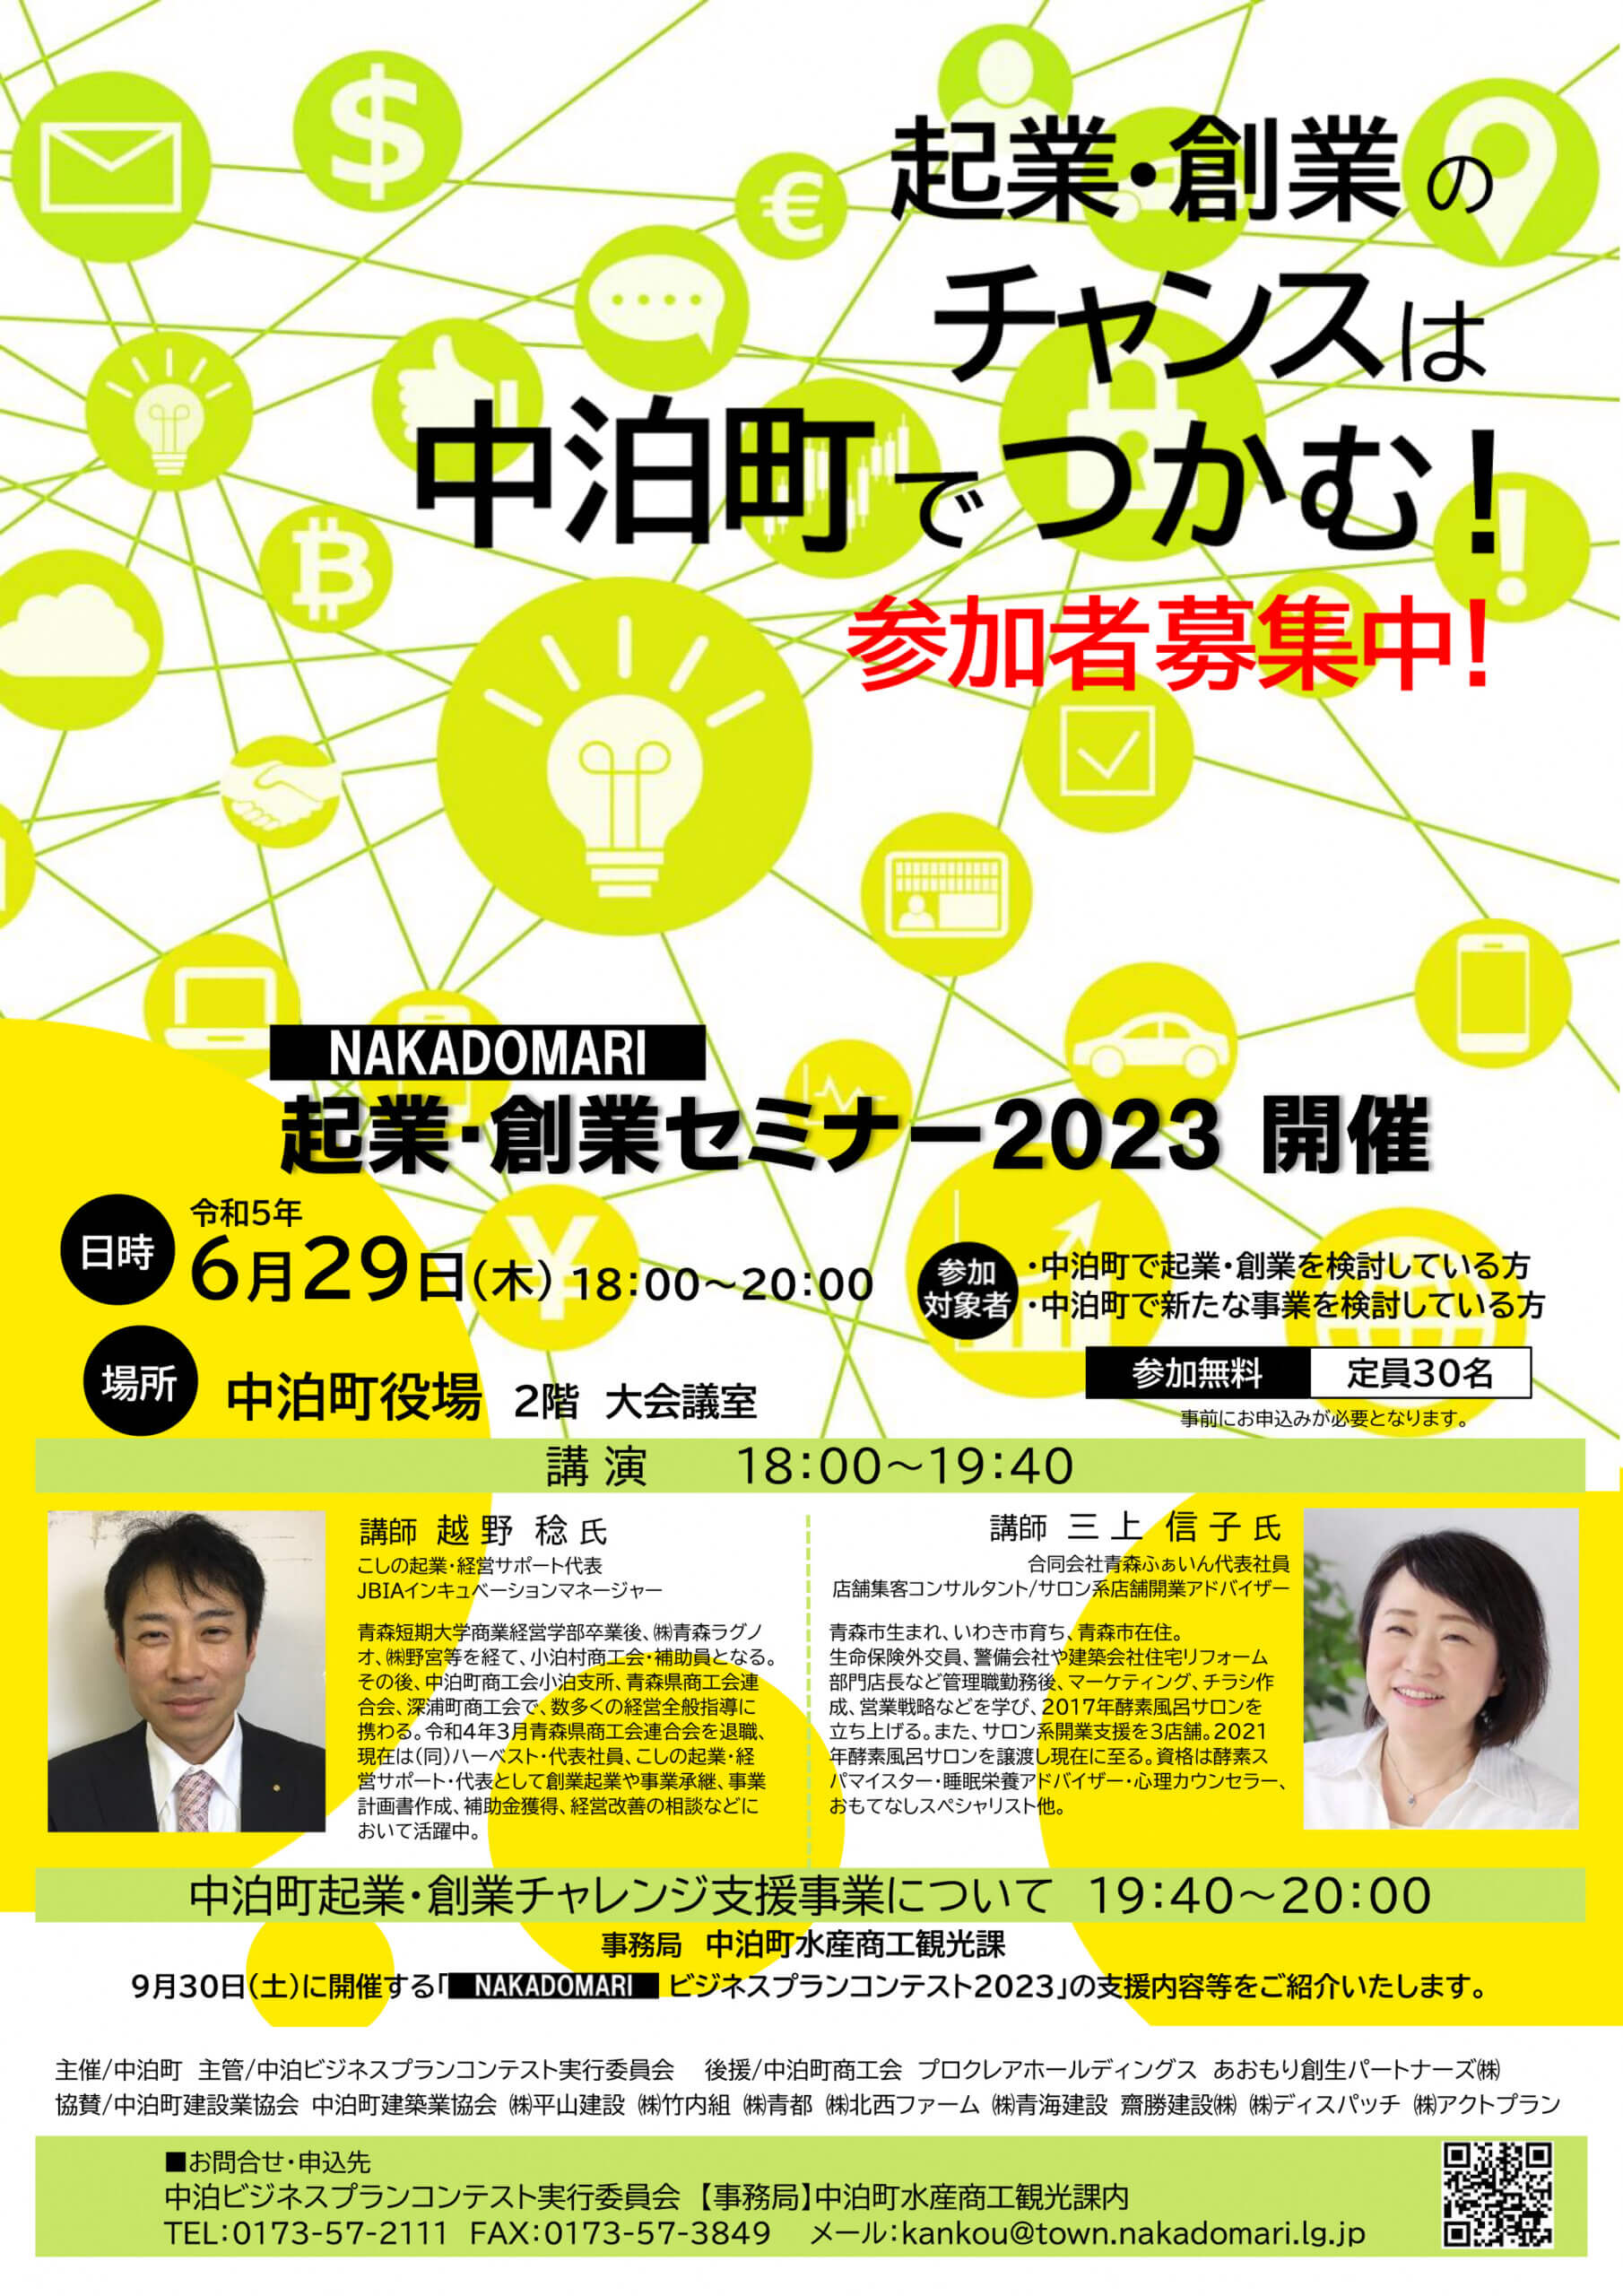 Featured image for “NAKADOMARI企業・創業セミナー2023開催”